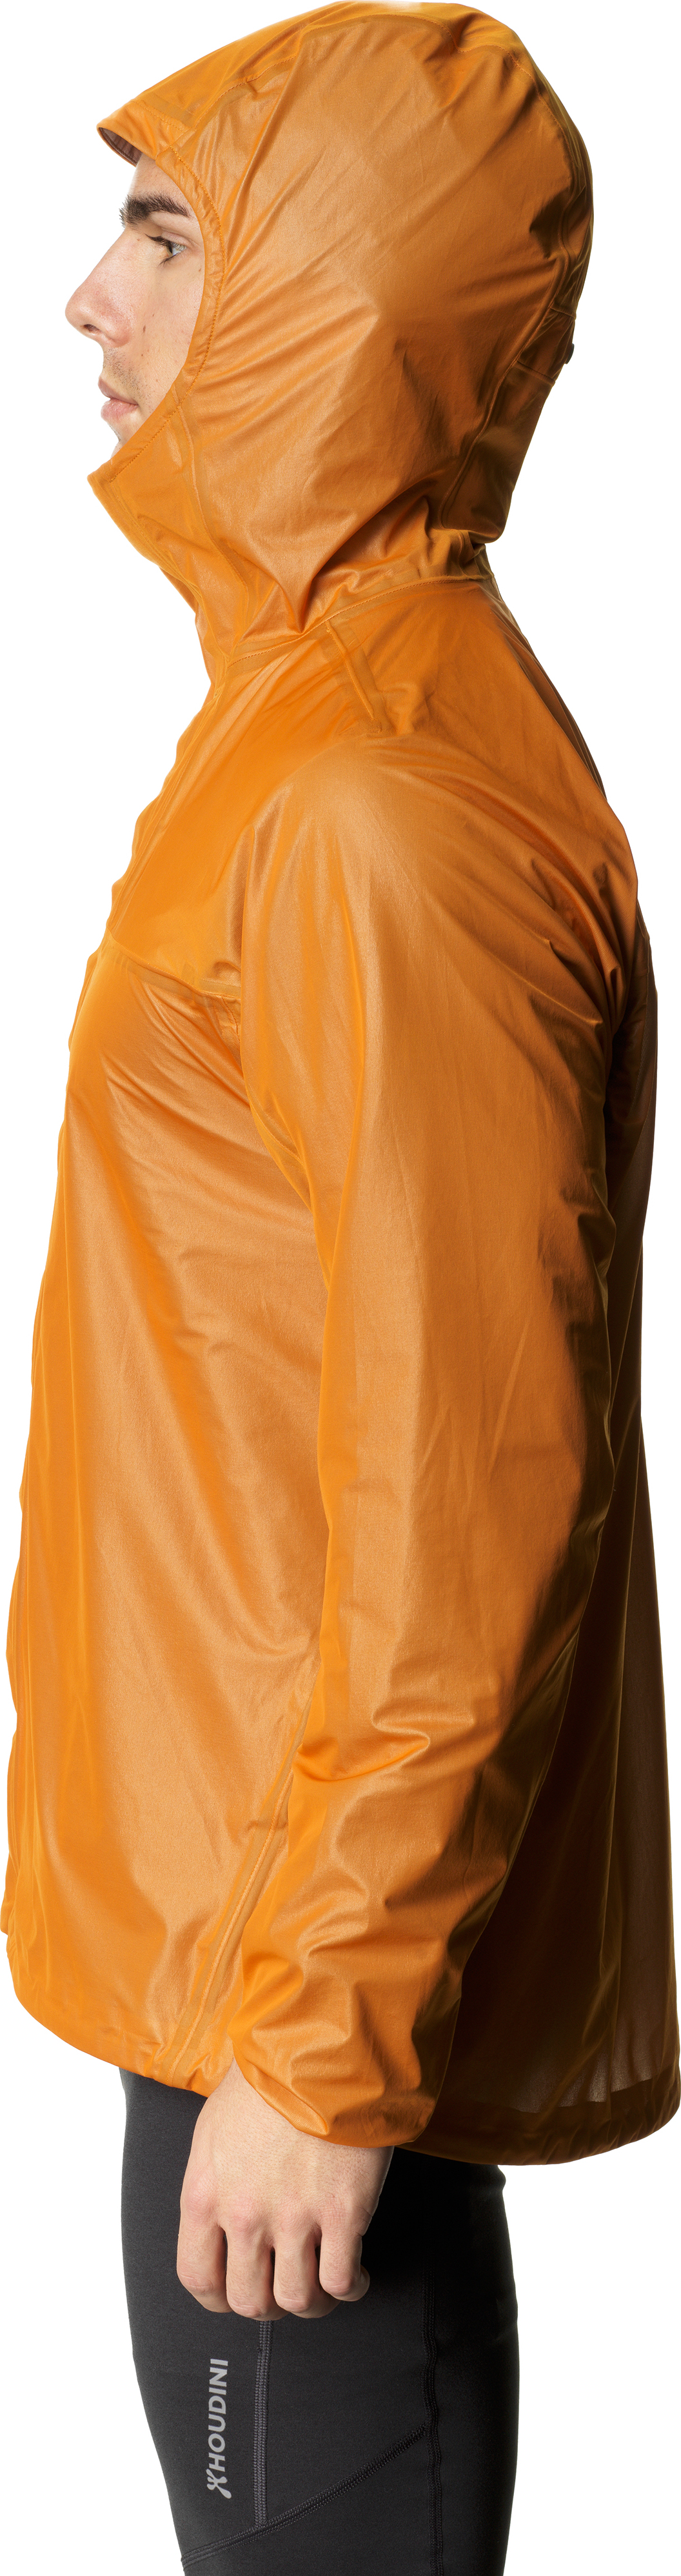 Men's The Orange Jacket Orange | Buy Men's The Orange Jacket 